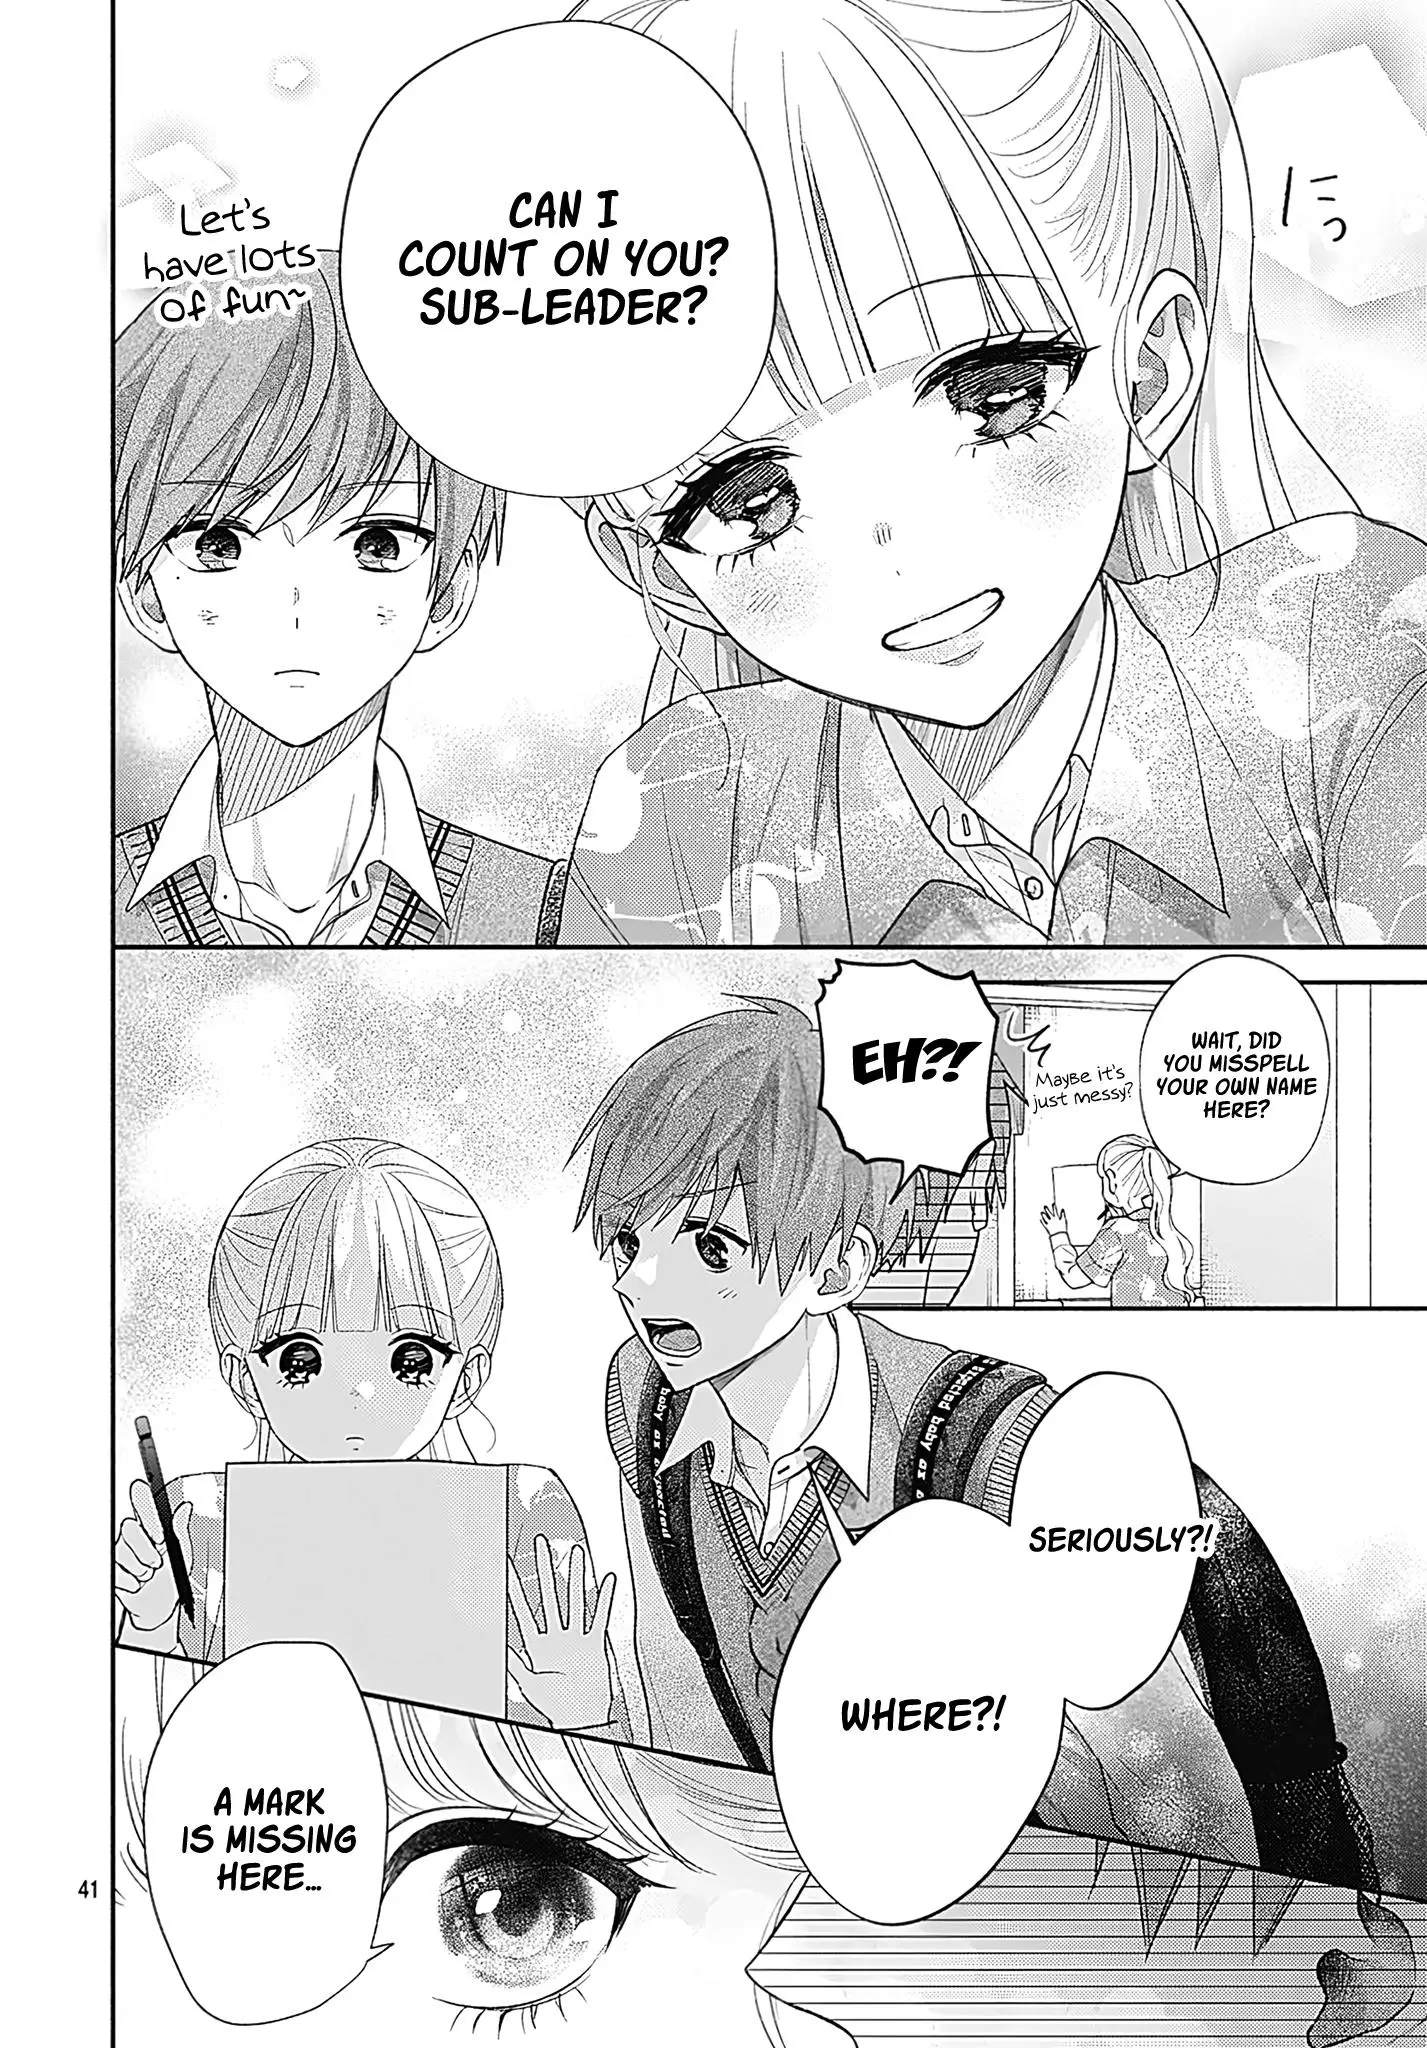 I Hate Komiyama - 3 page 41-983664fe